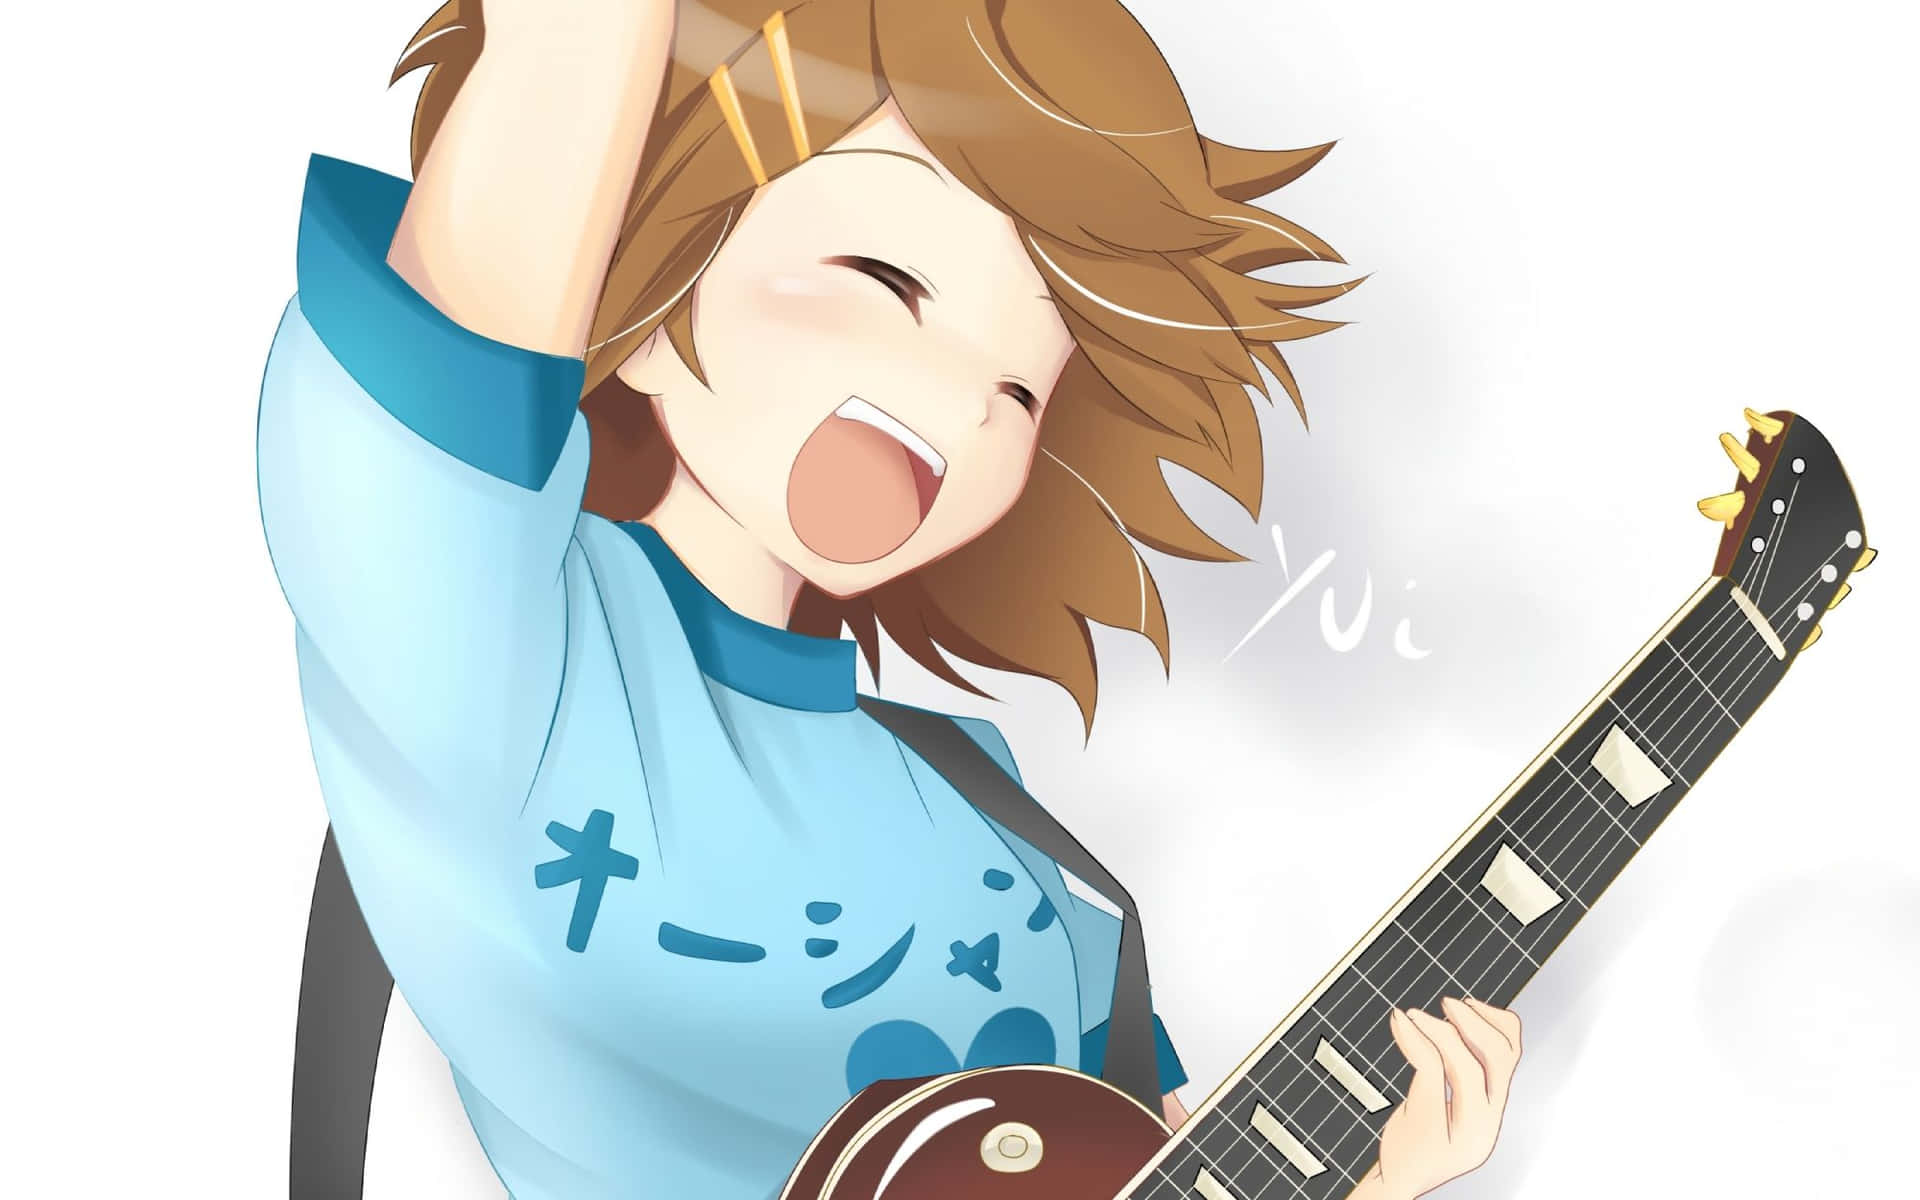 Yui Hirasawa playing her guitar with passion Wallpaper